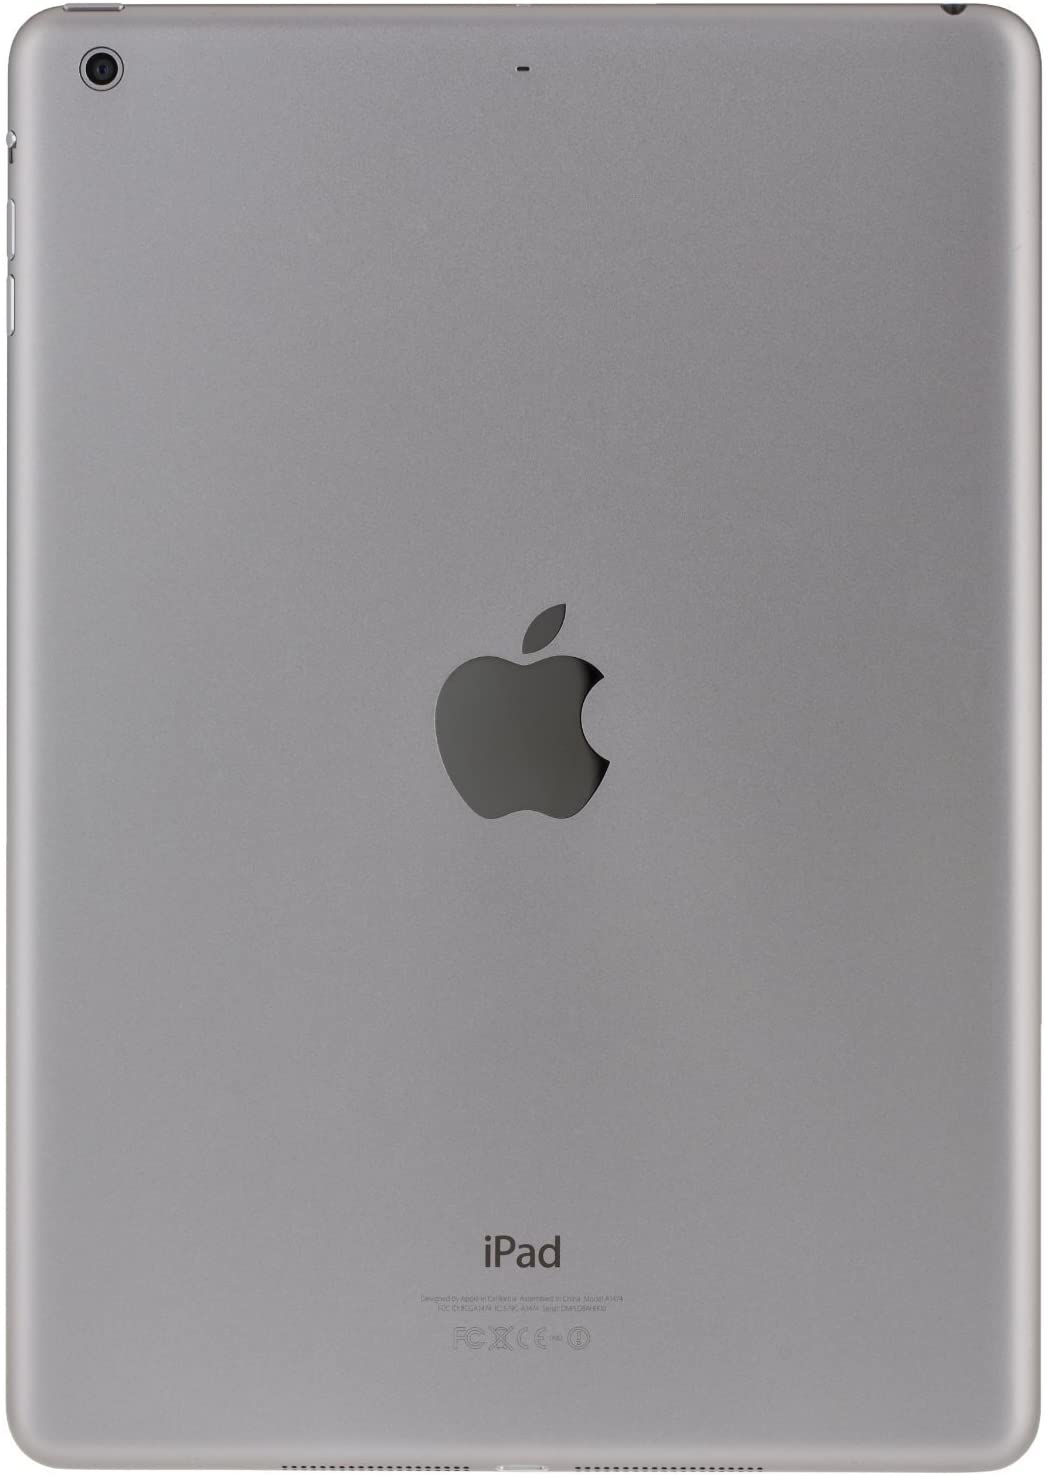 Apple iPad 2018 32GB - WiFi Only - Space Gray (Renewed) - Hightech 